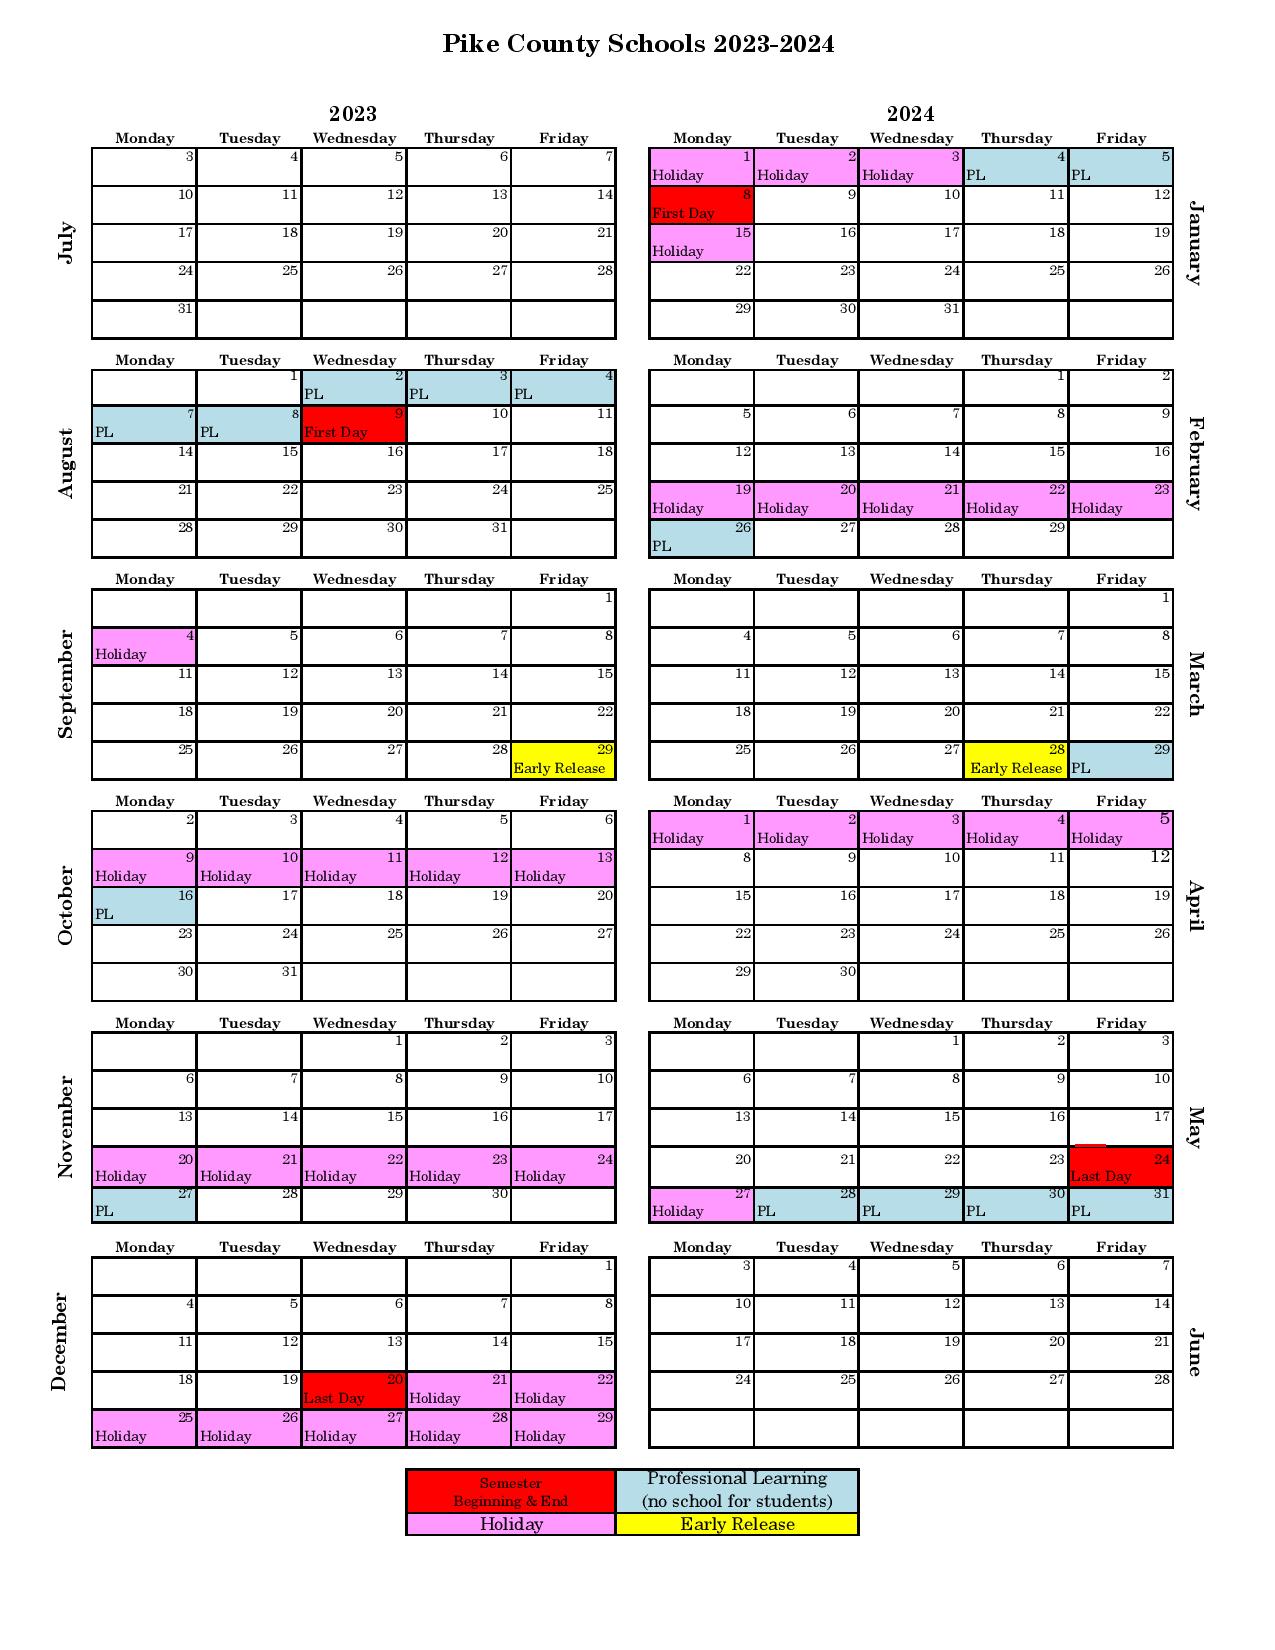 Pike County Schools Calendar 20232024 in PDF